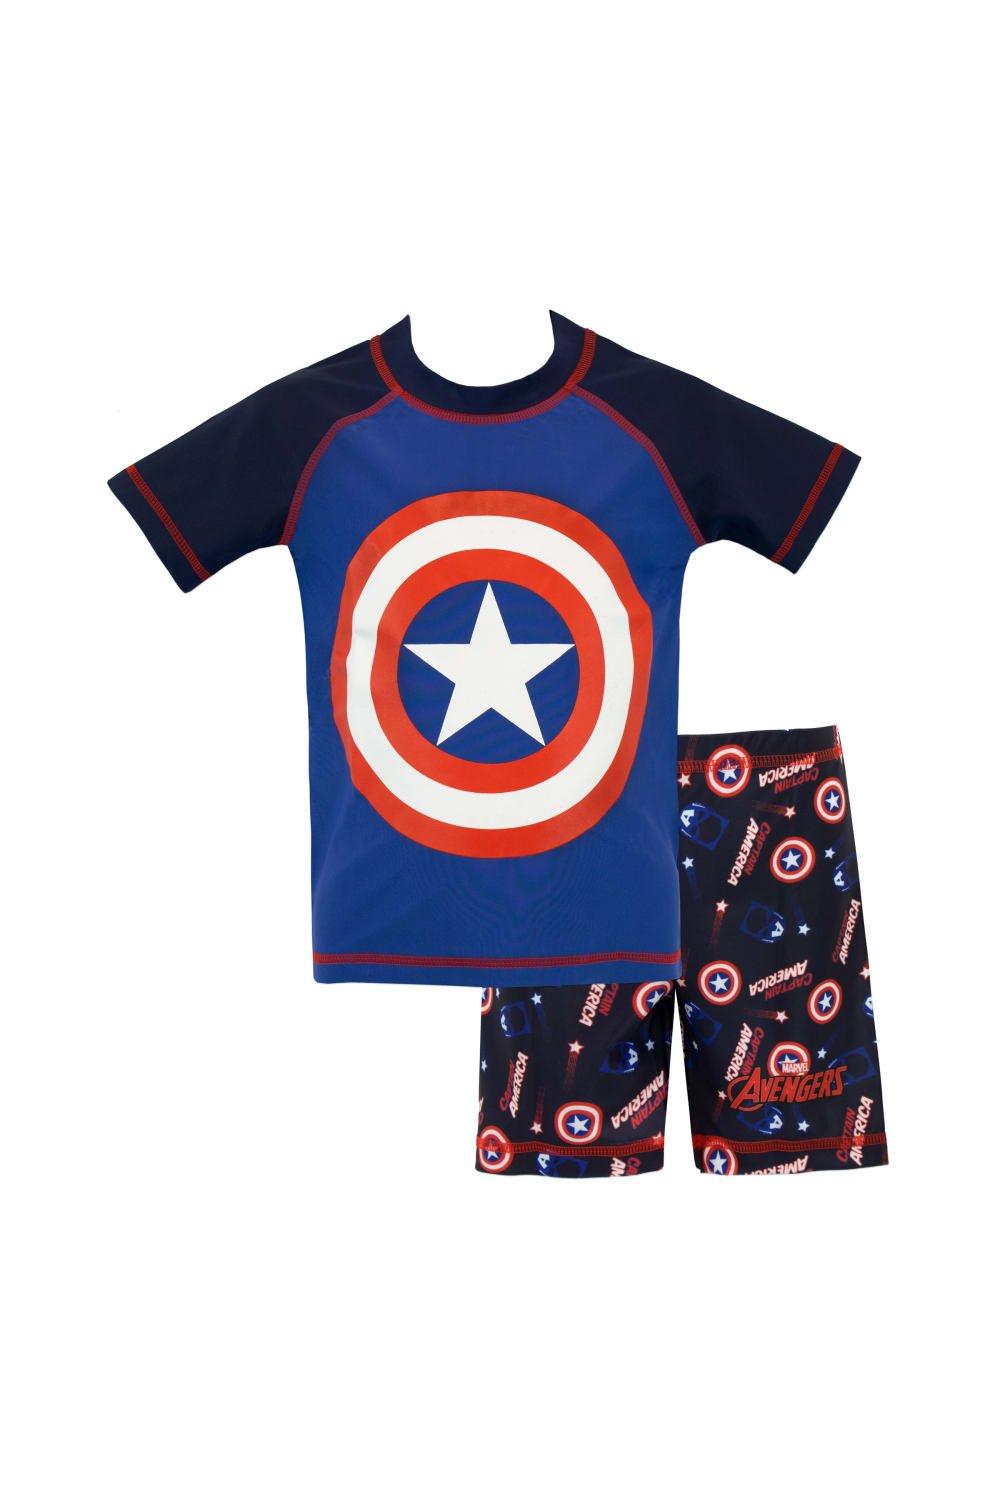 Captain America Avengers Two Piece Swim Set